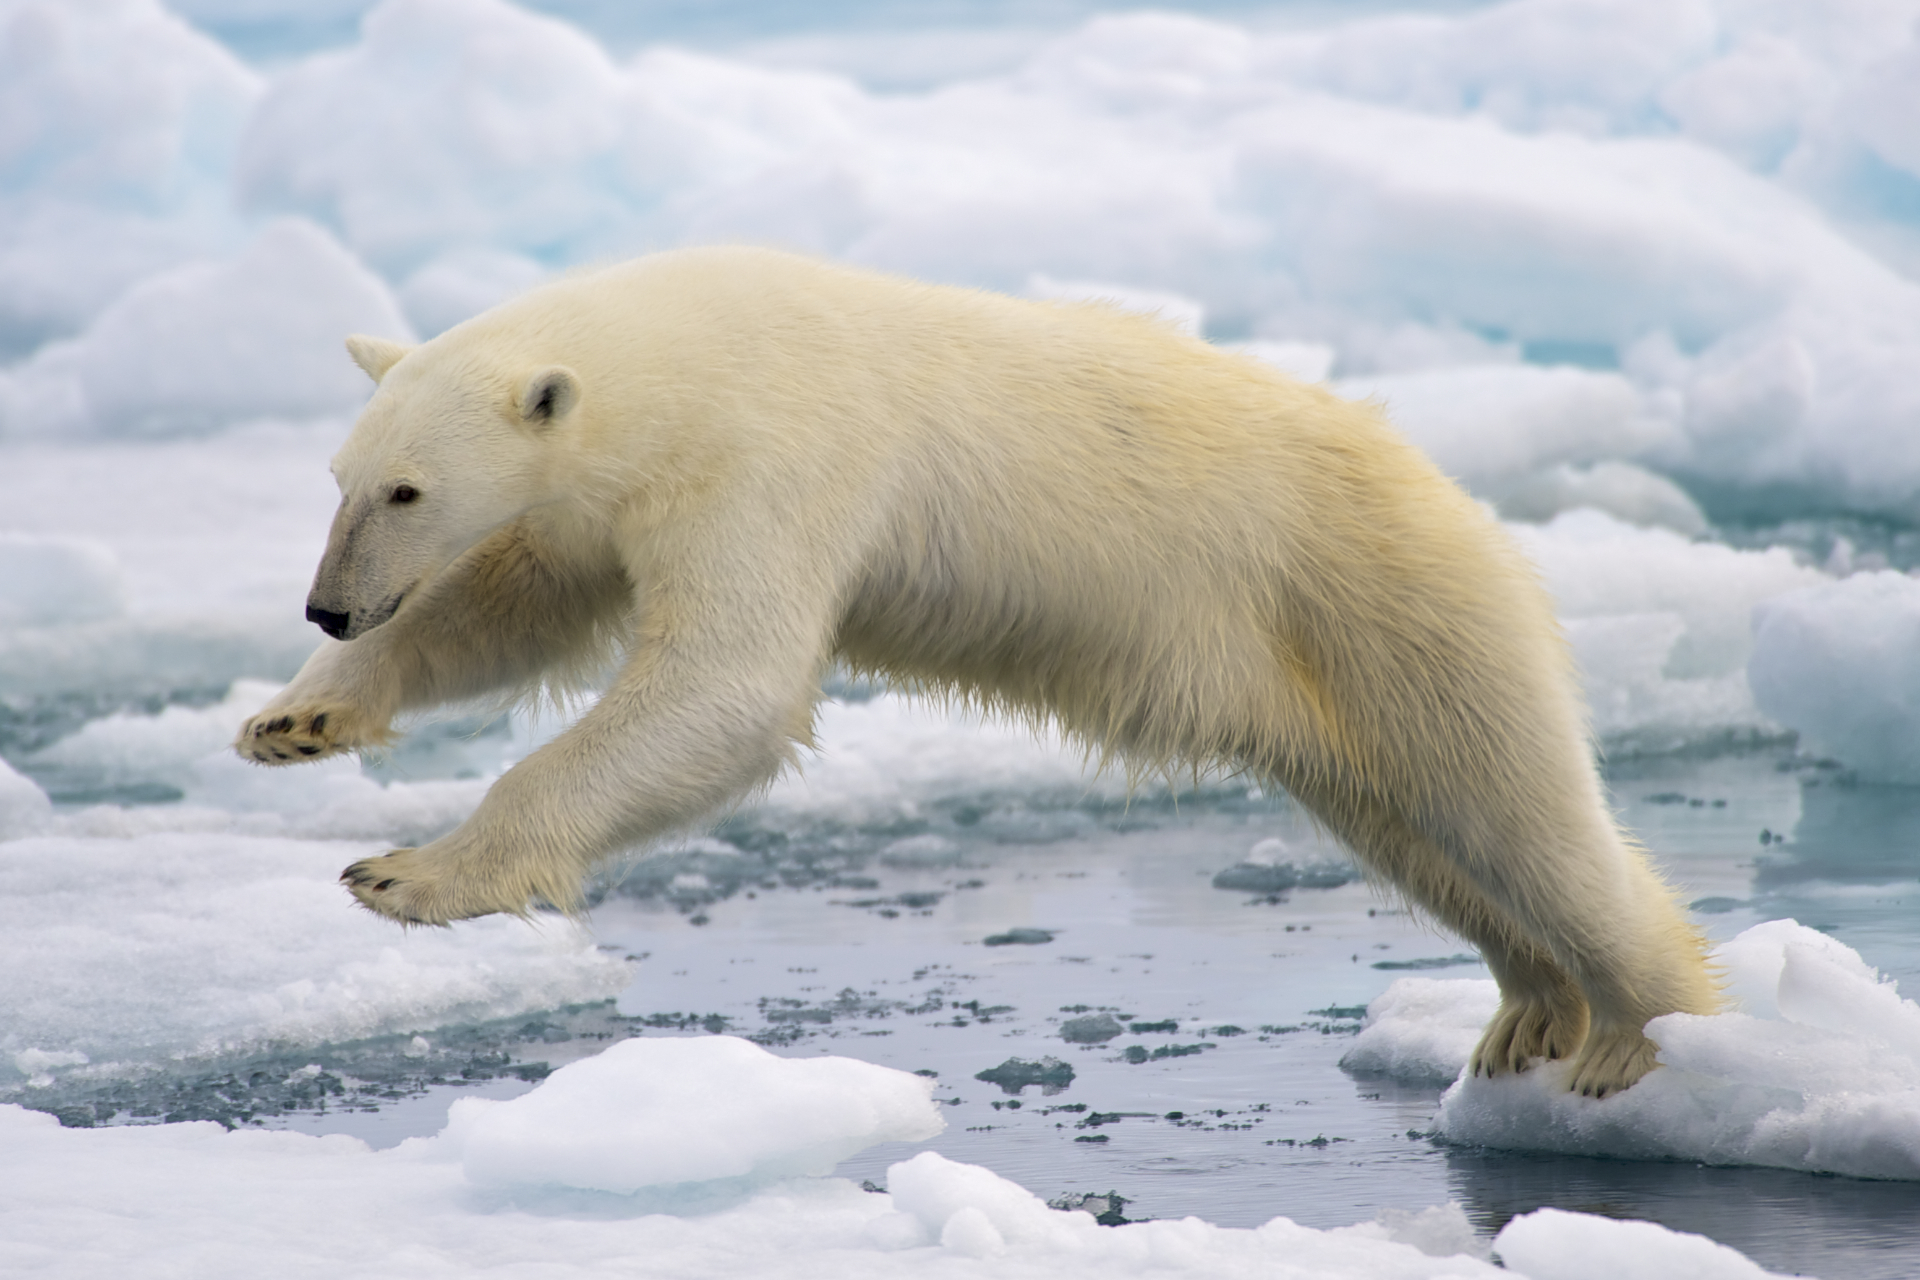 A frame-filling portrait of a male polar bear (Ursus maritimus) jumping in the pack ice. Retrieved from https://en.wikipedia.org/wiki/Polar_bear